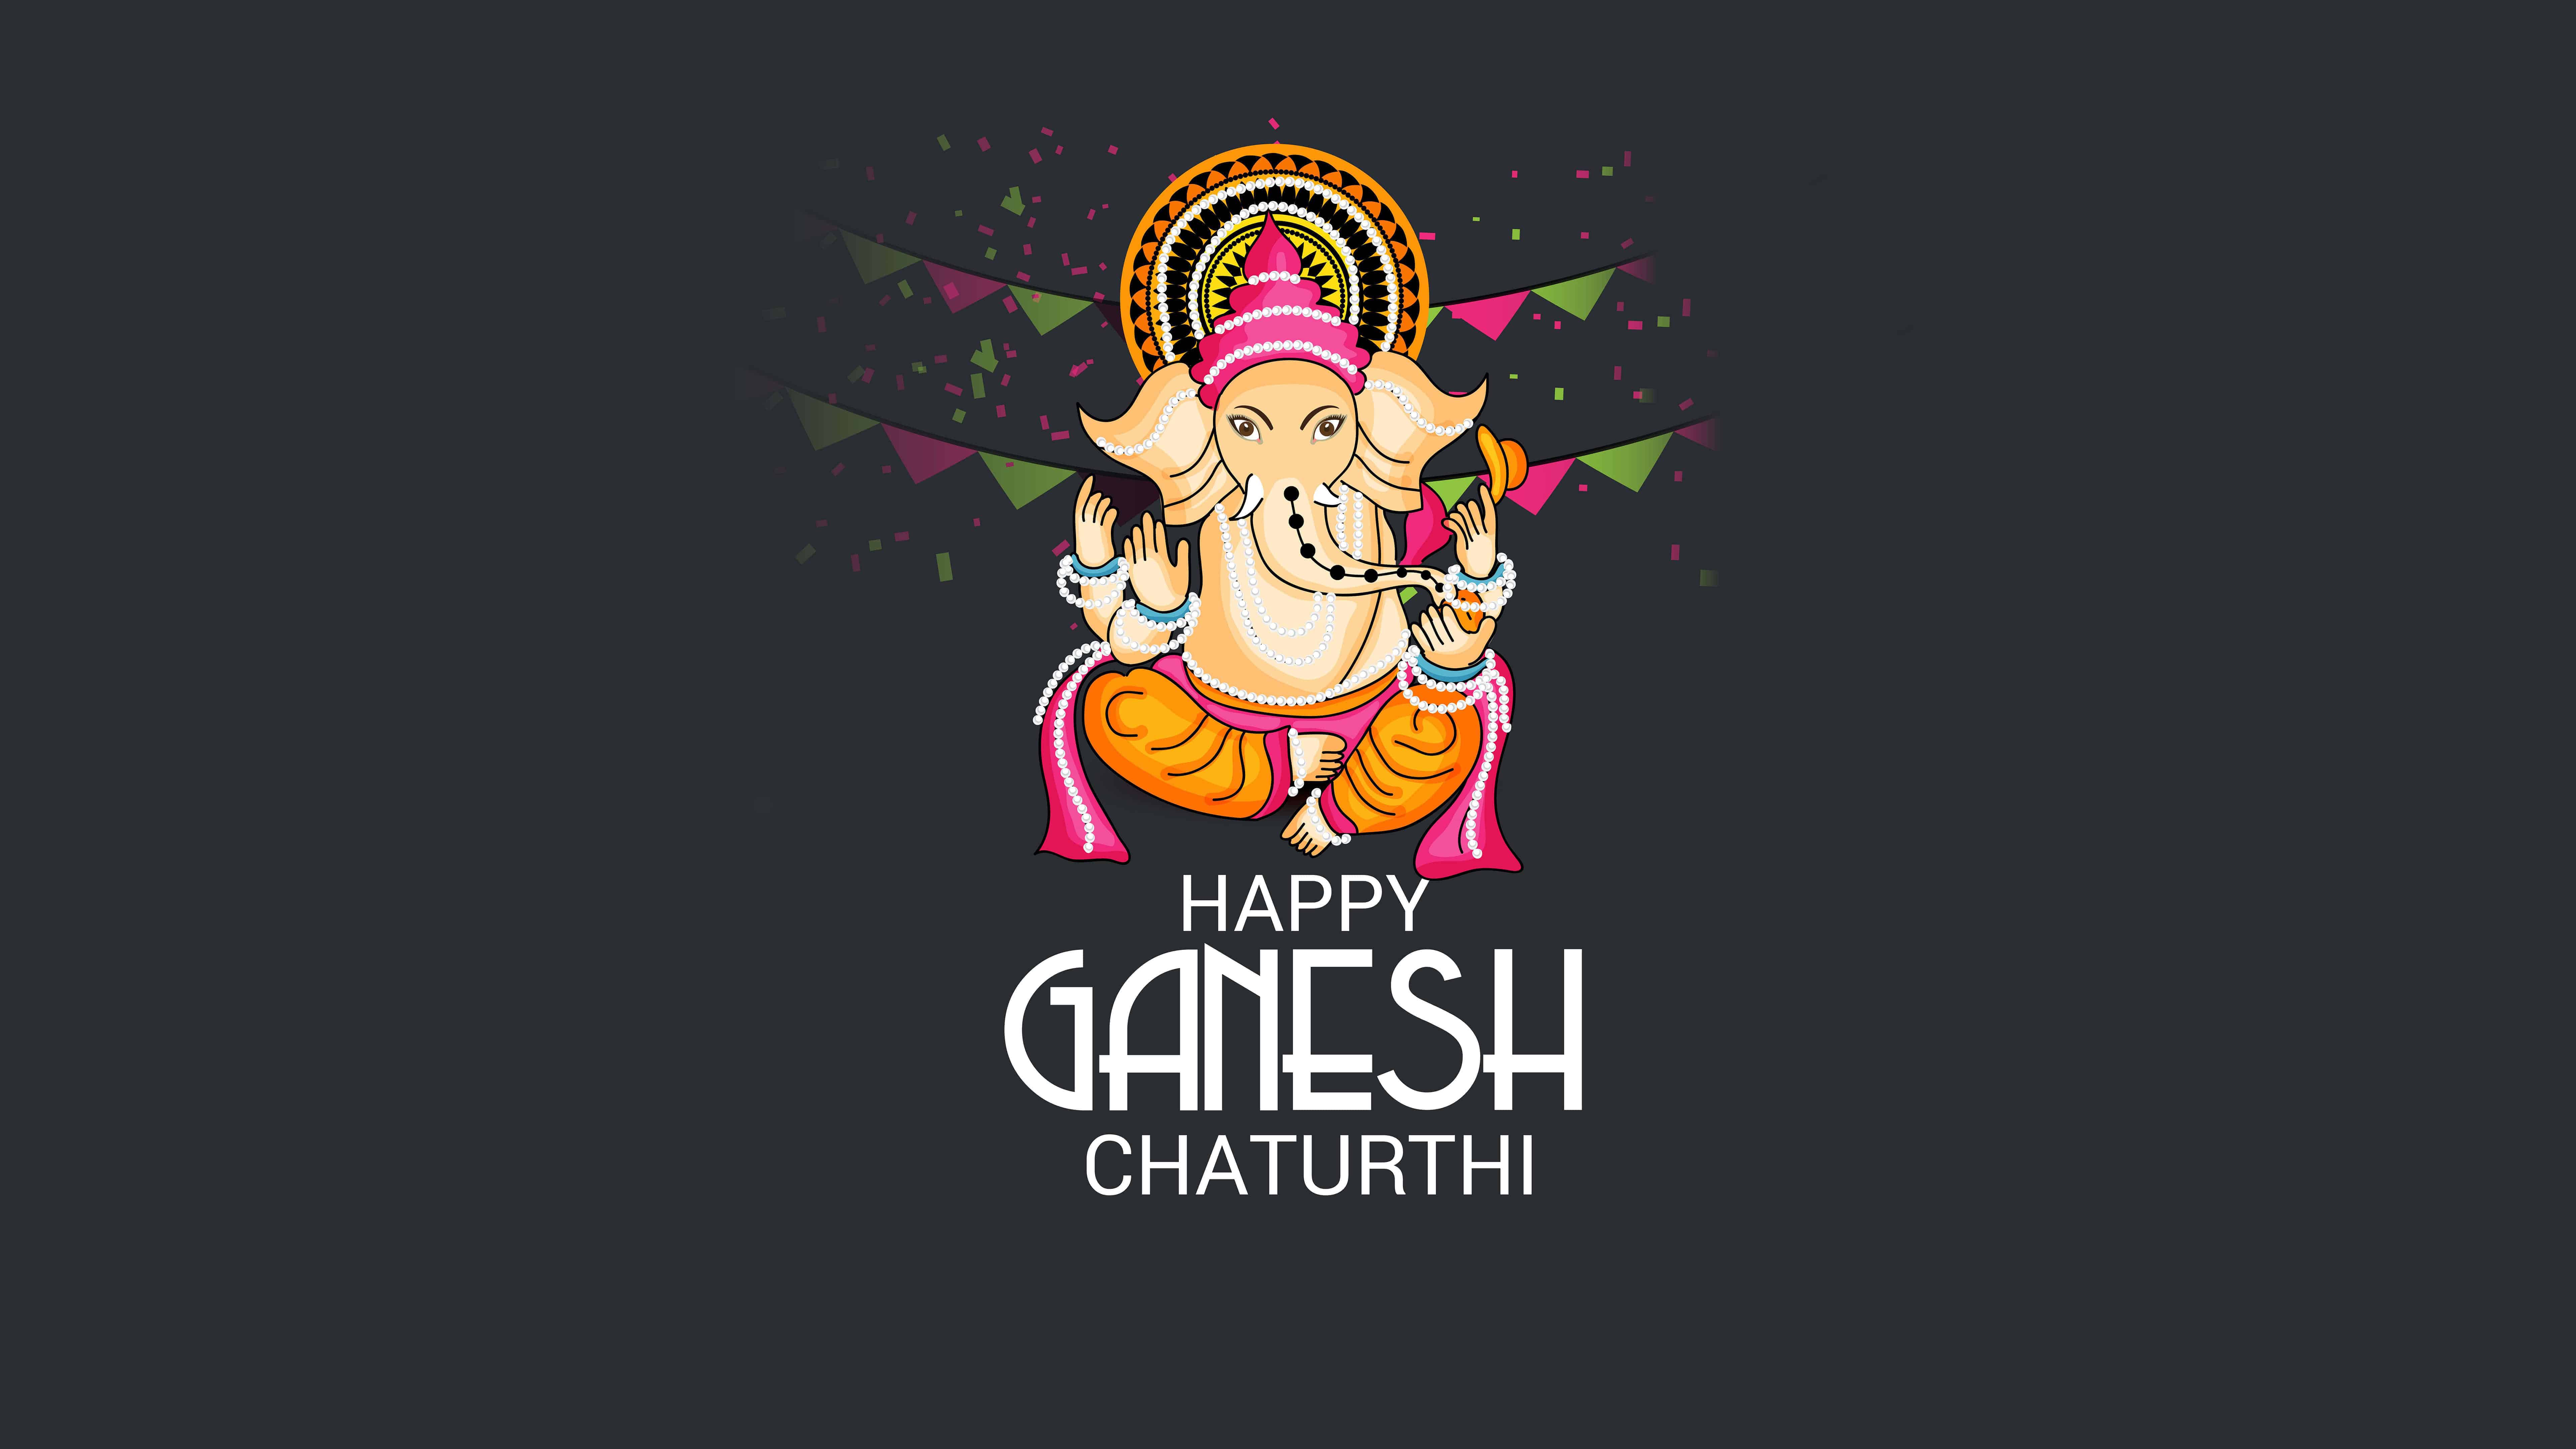 Happy Ganesh Chaturthi UHD 8K Wallpaper | Pixelz